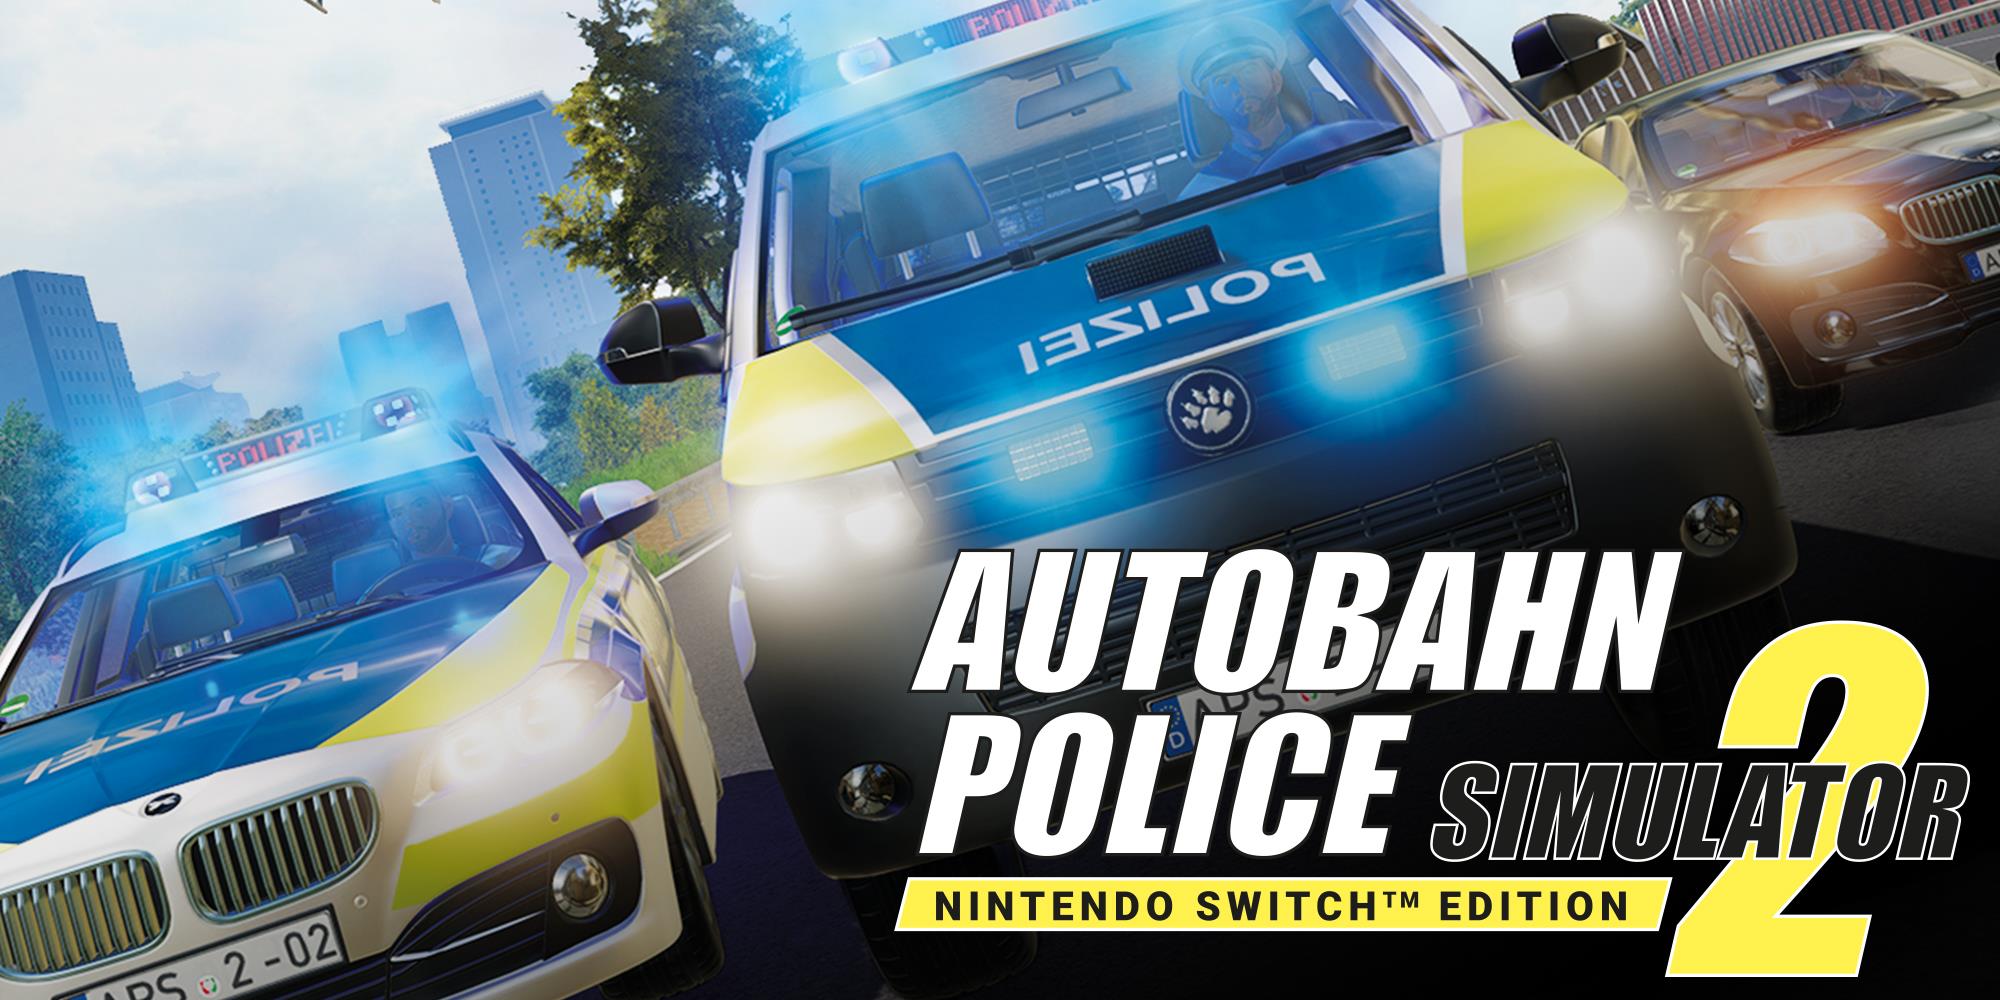 Autobahn Police Simulator 2 Switch Edition, Nintendo Switch-Spiele, Spiele